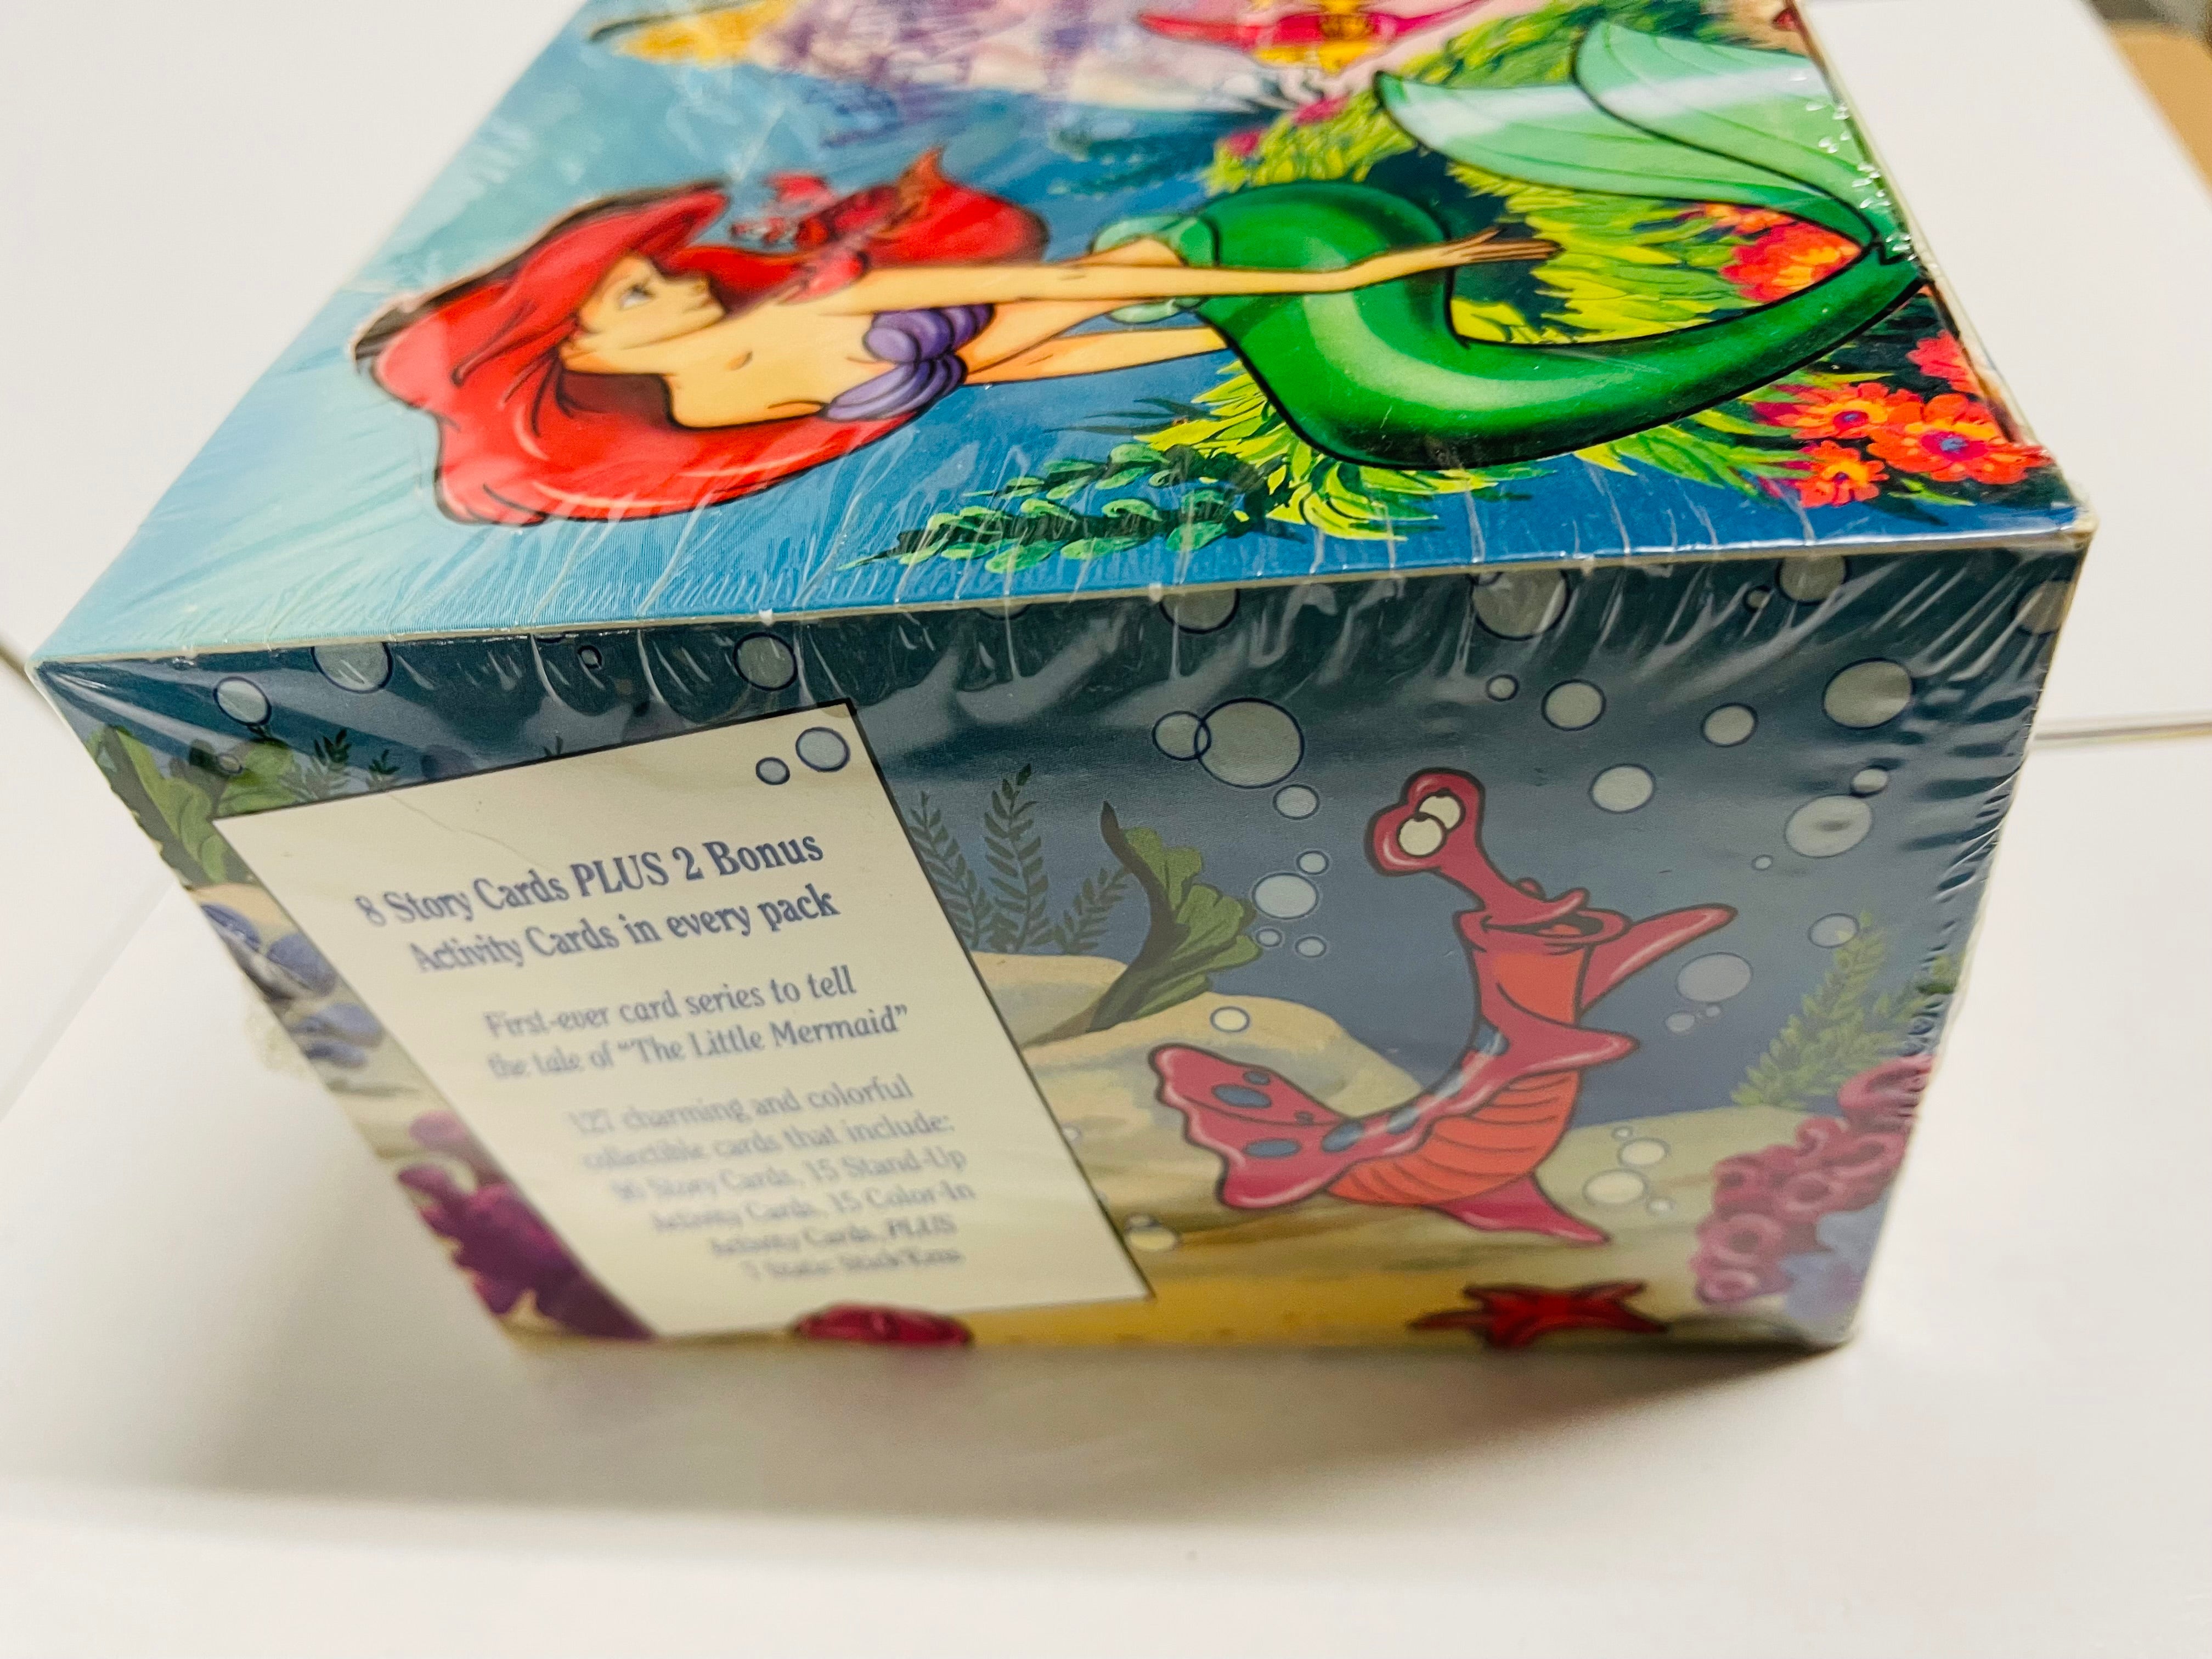 Little Mermaid movie Proset 36 packs box 1991